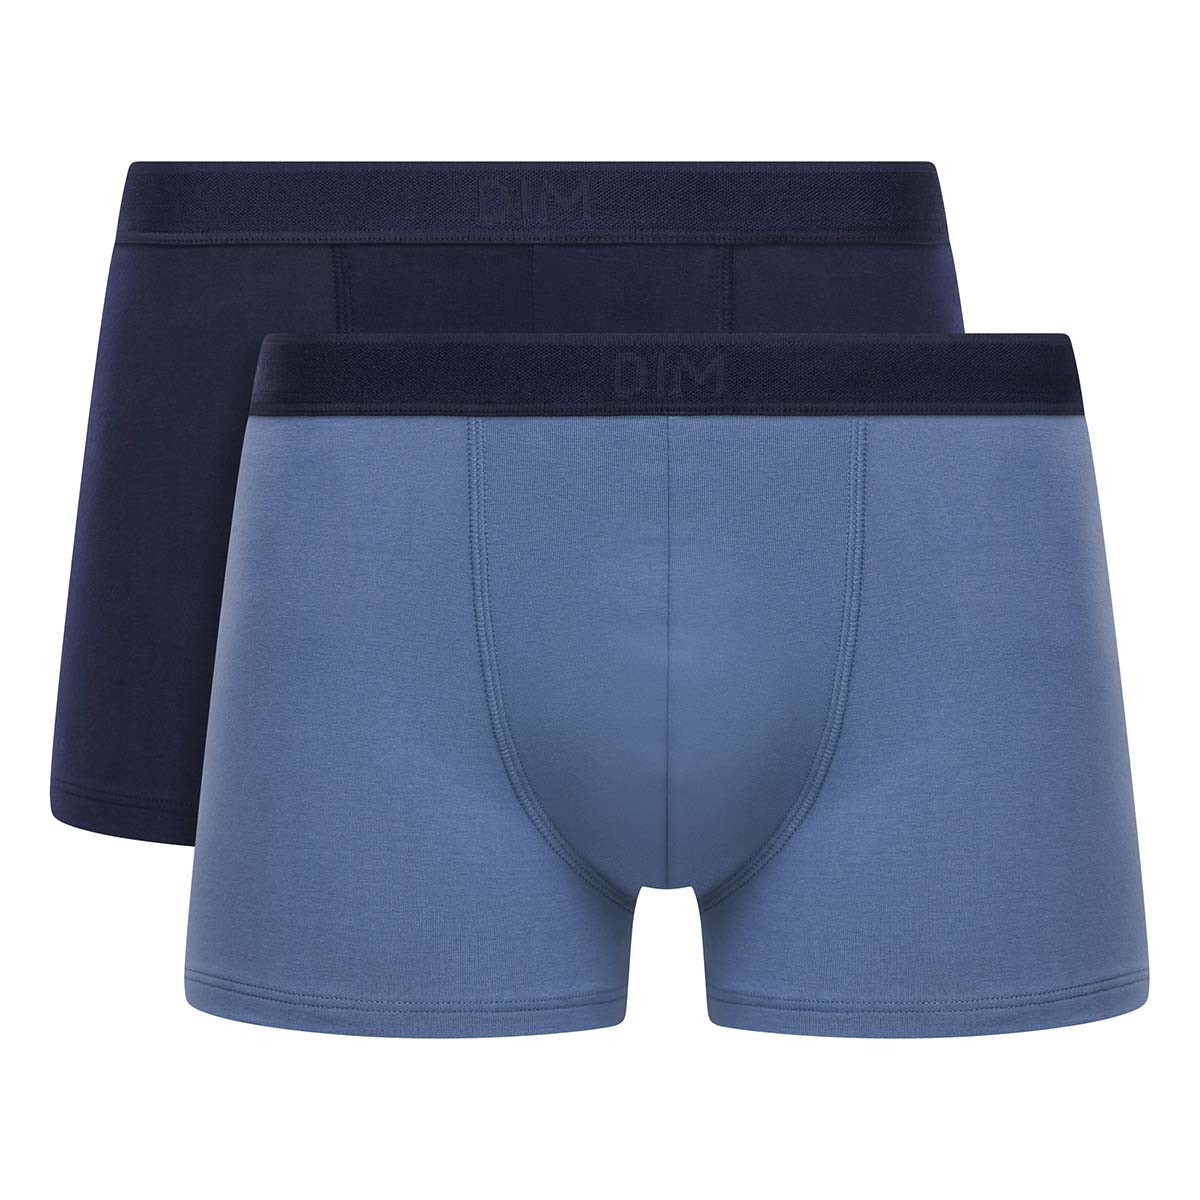 Dim Men's Ultra Resist Stretch Cotton Boxer Shorts x3, Denim Blue